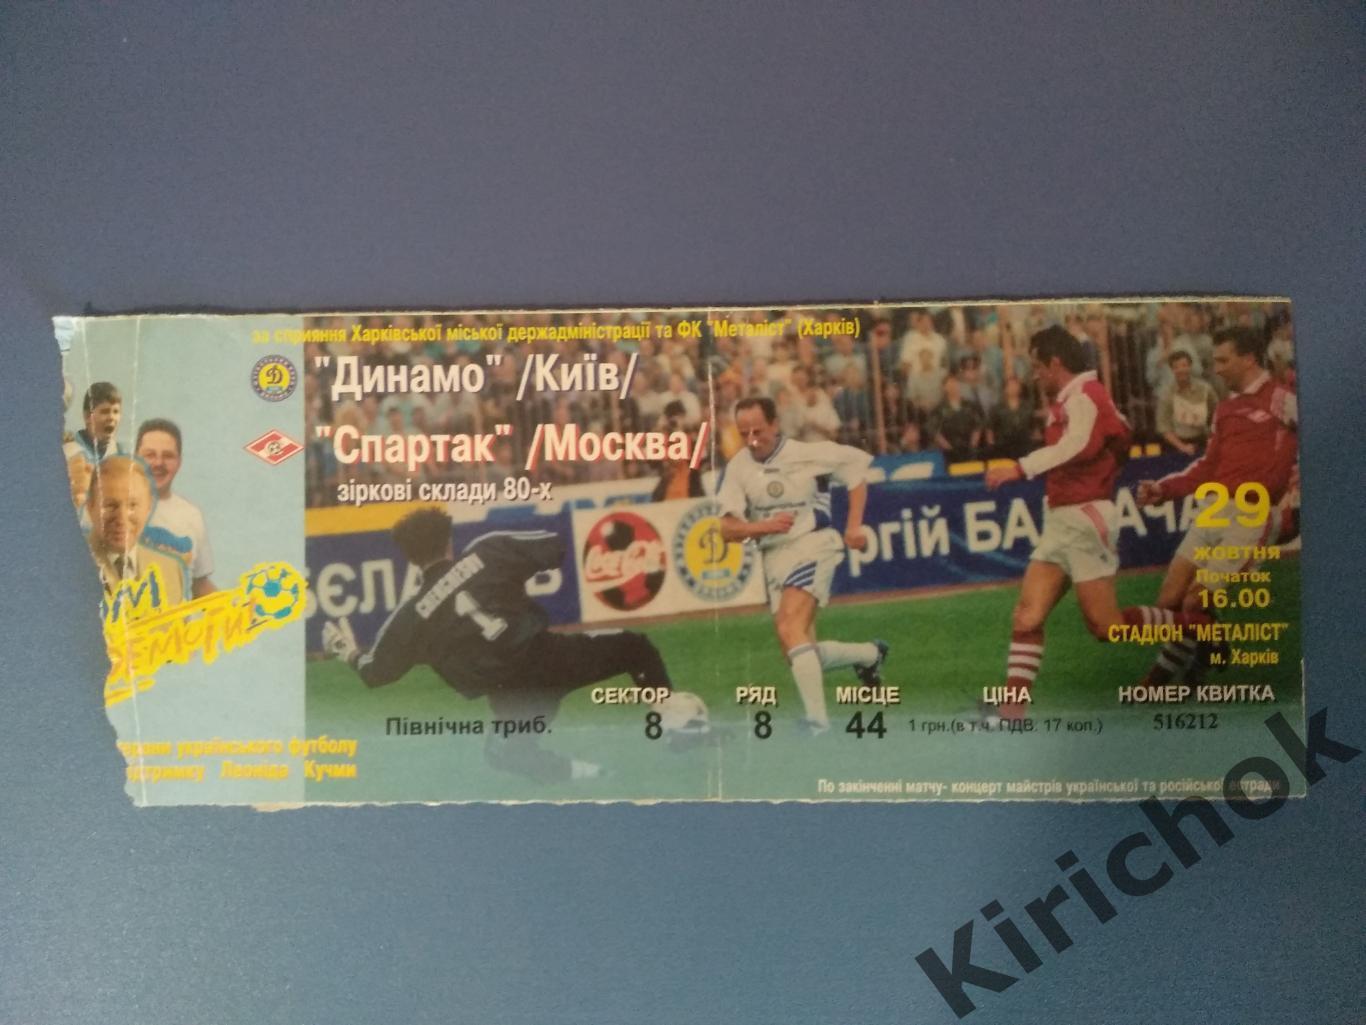 МТМ! Харьков! Динамо Киев - Спартак Москва 29.10.1999